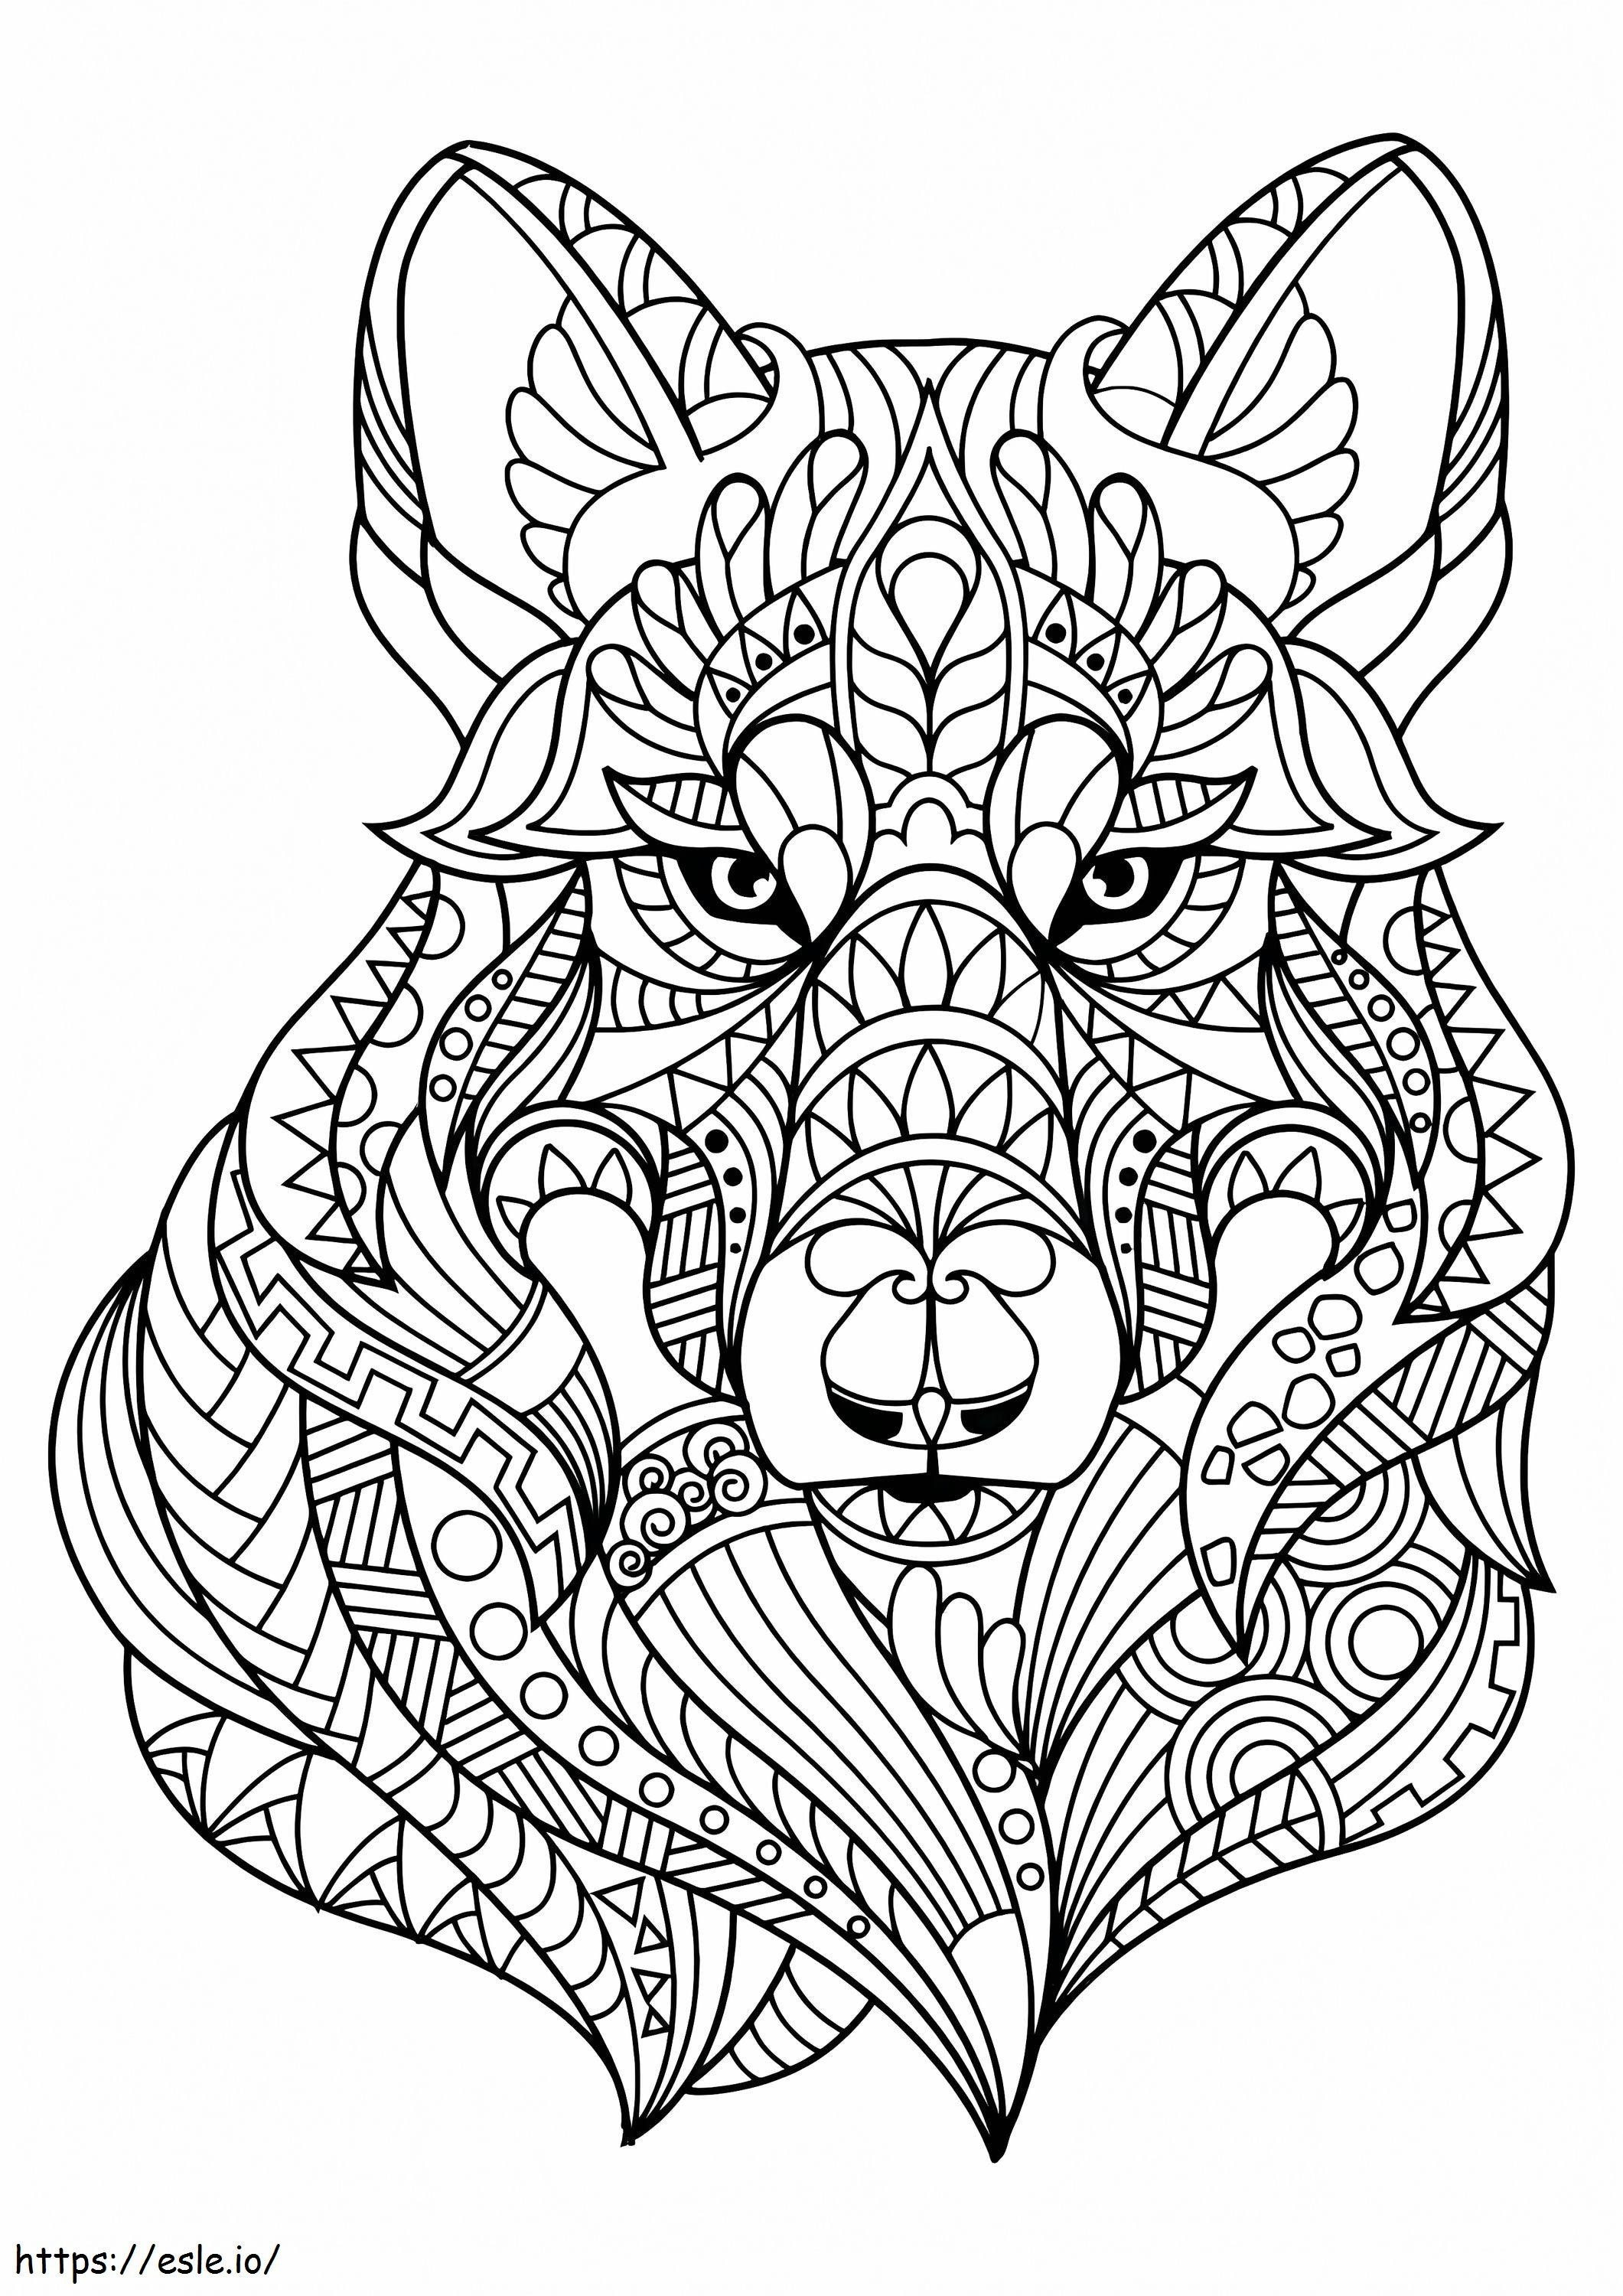 Wolf-Tier-Mandala ausmalbilder